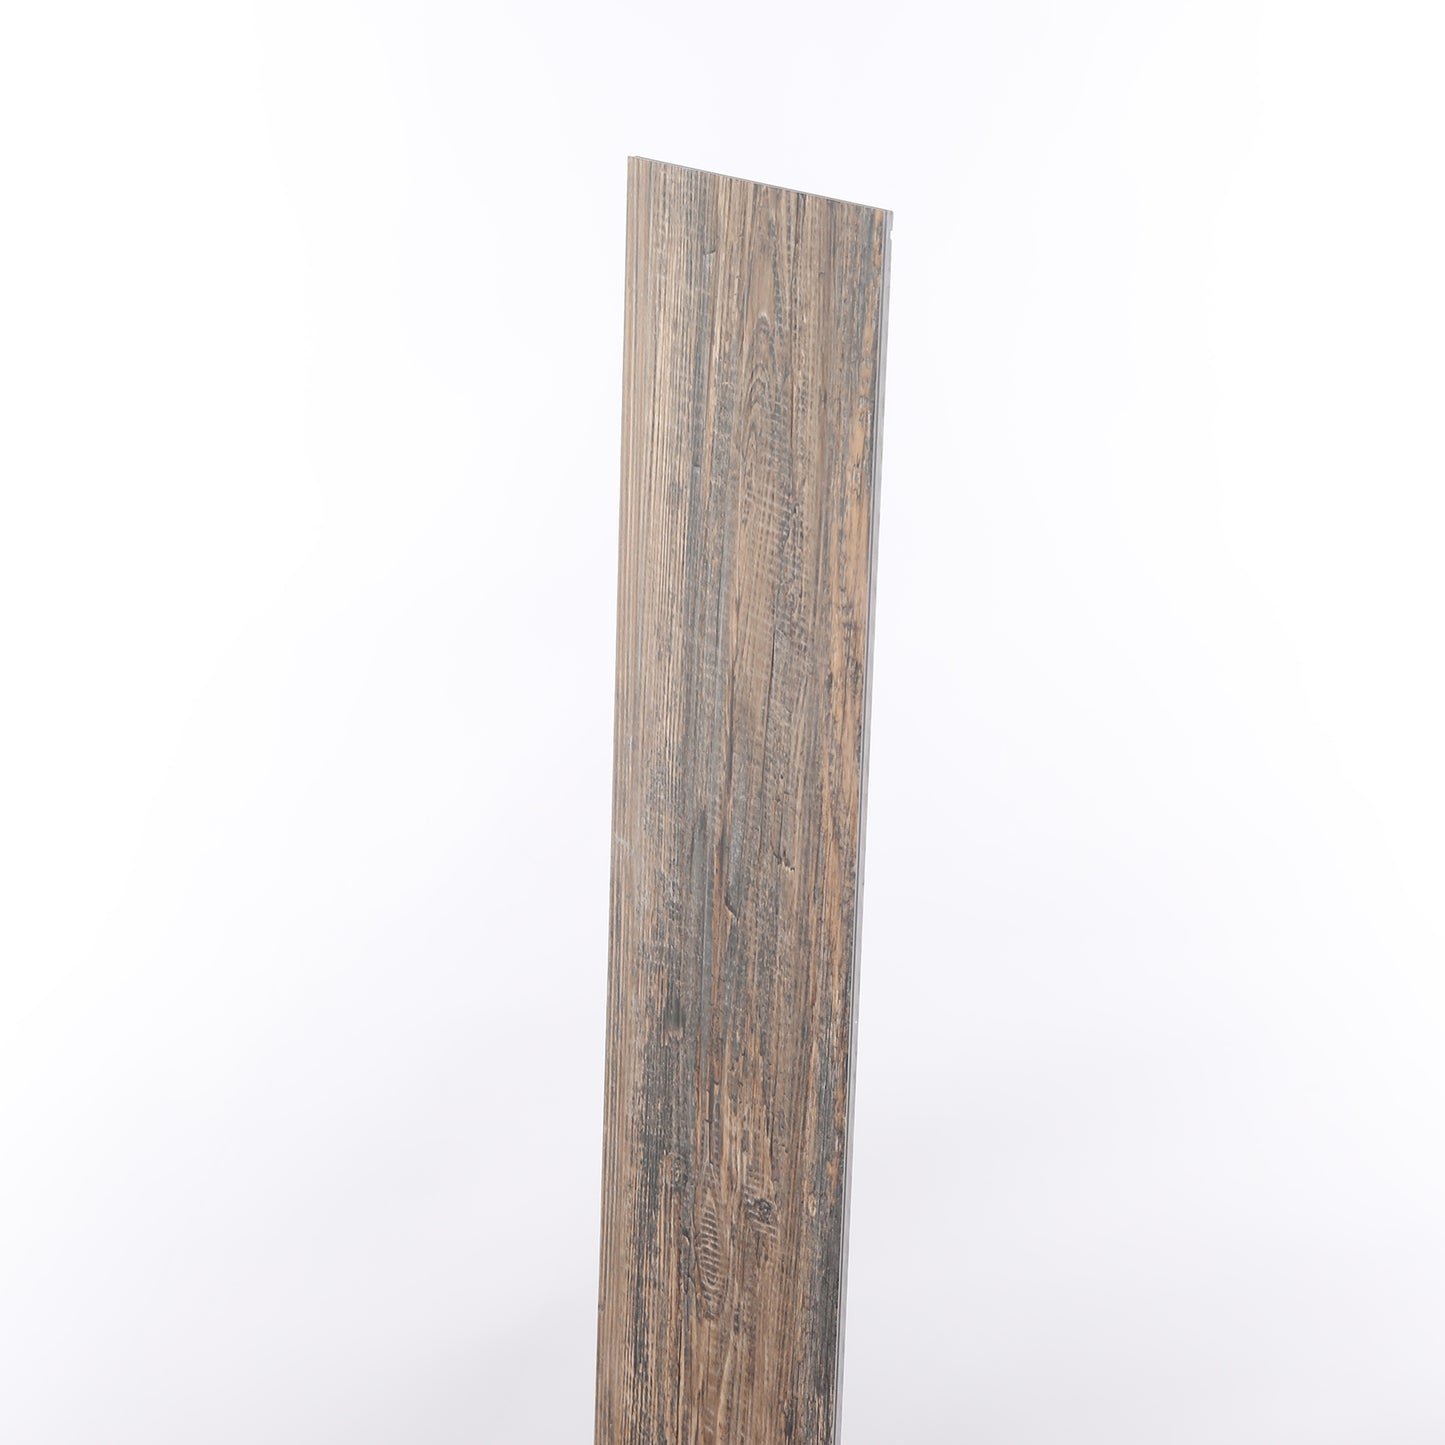 4mm Stagecoach Wood HDPC® Waterproof Luxury Vinyl Plank Flooring 9.13 in. Wide x 48 in. Long